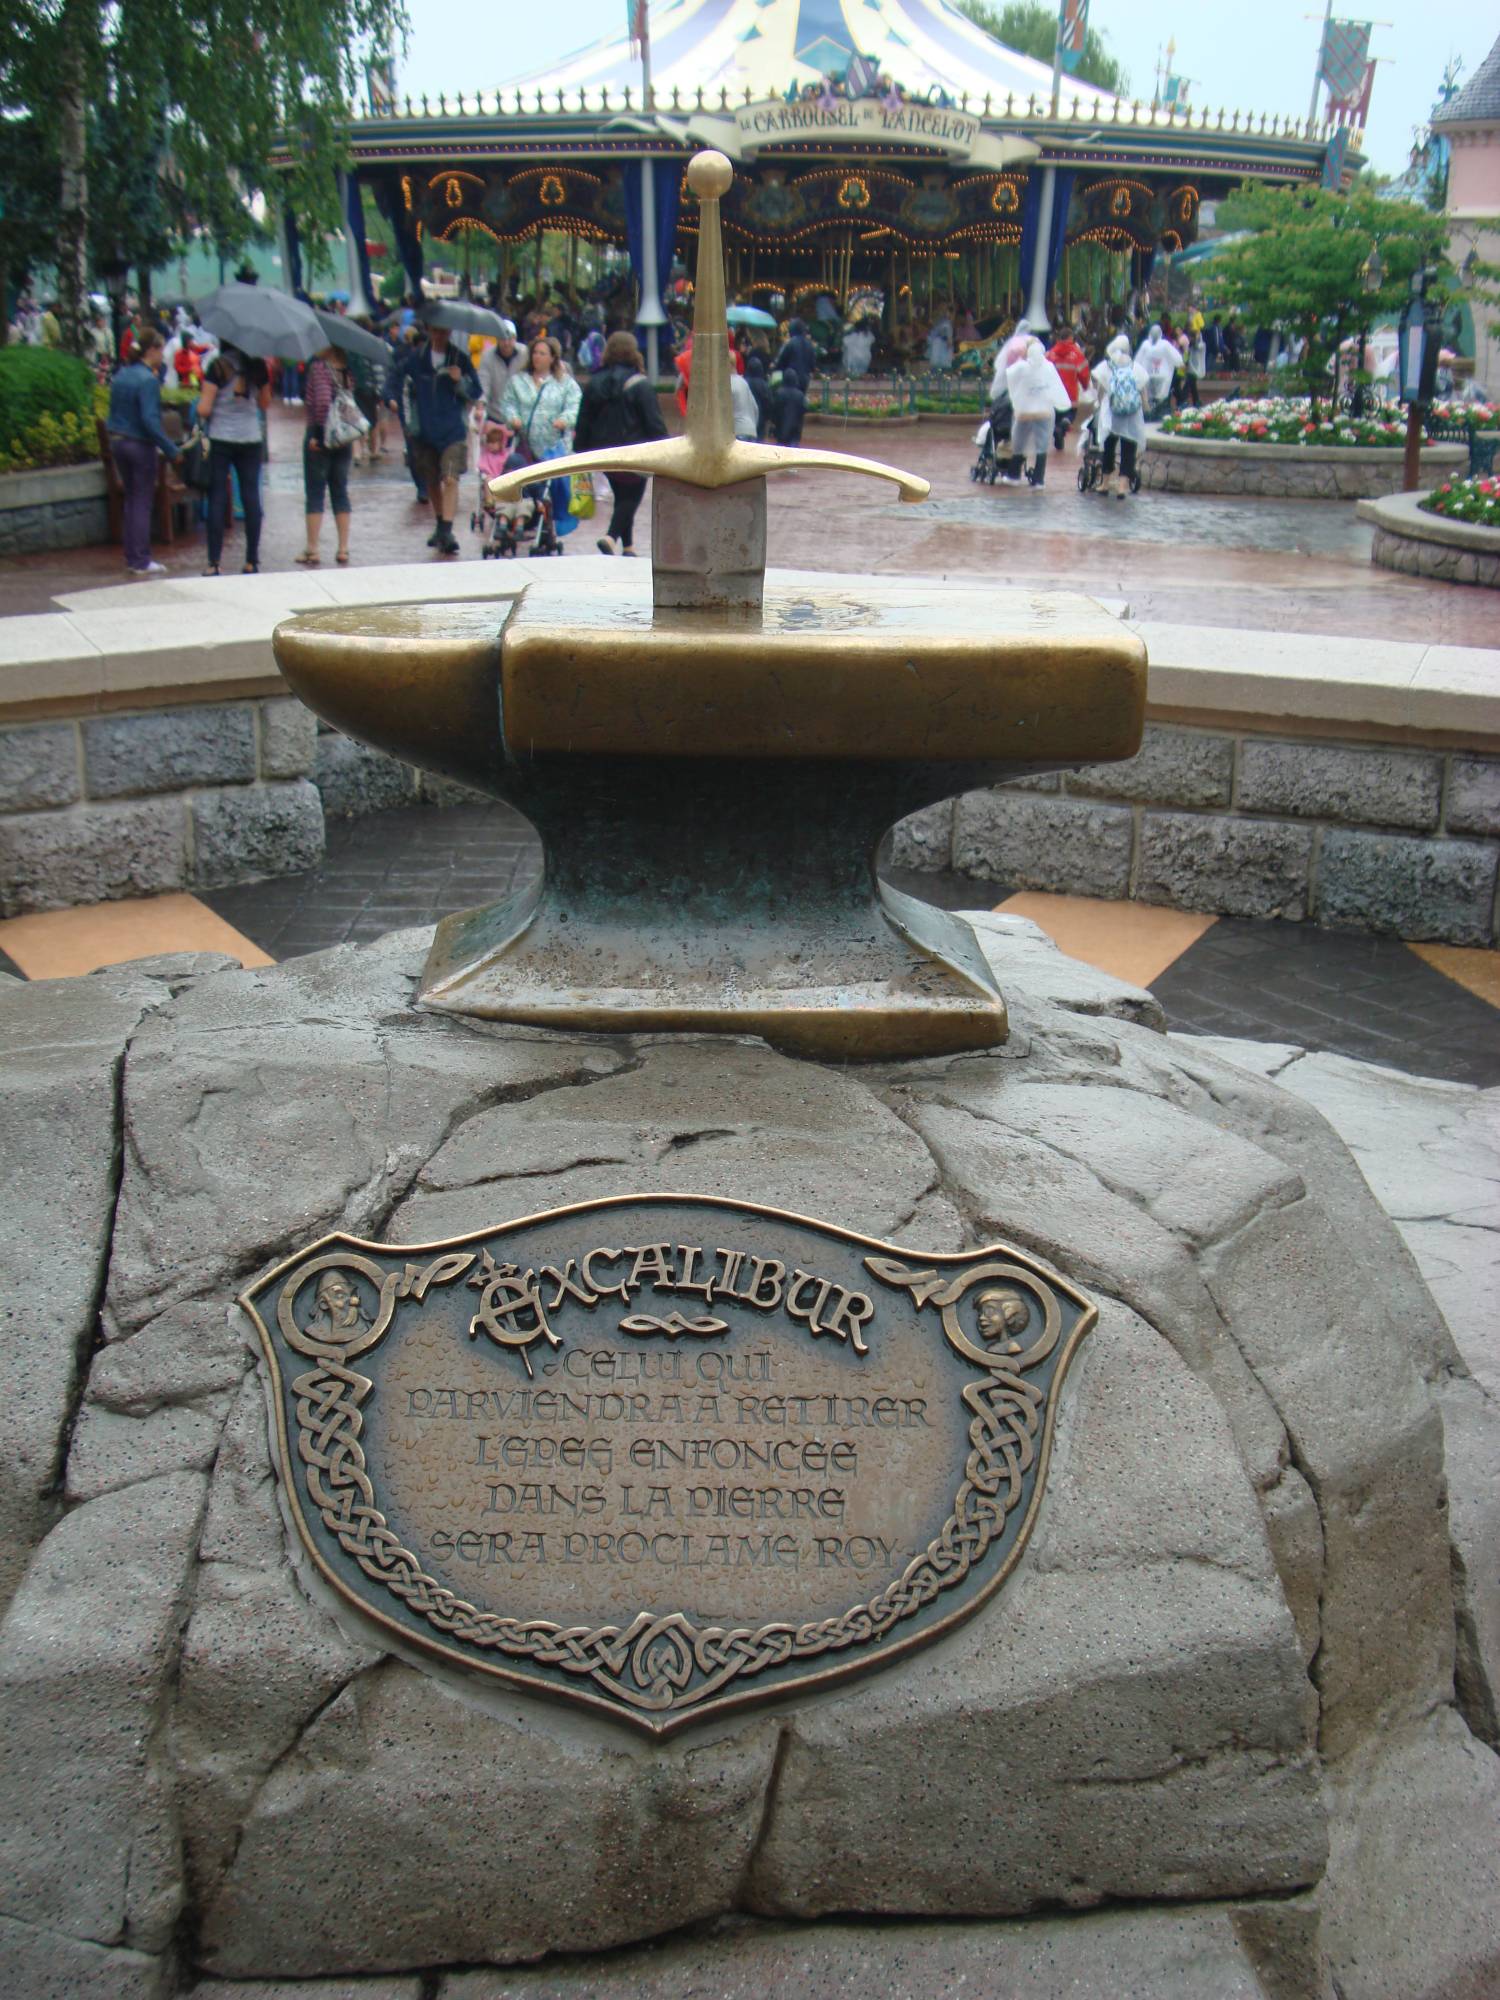 Disneyland Paris - Sword in the Stone